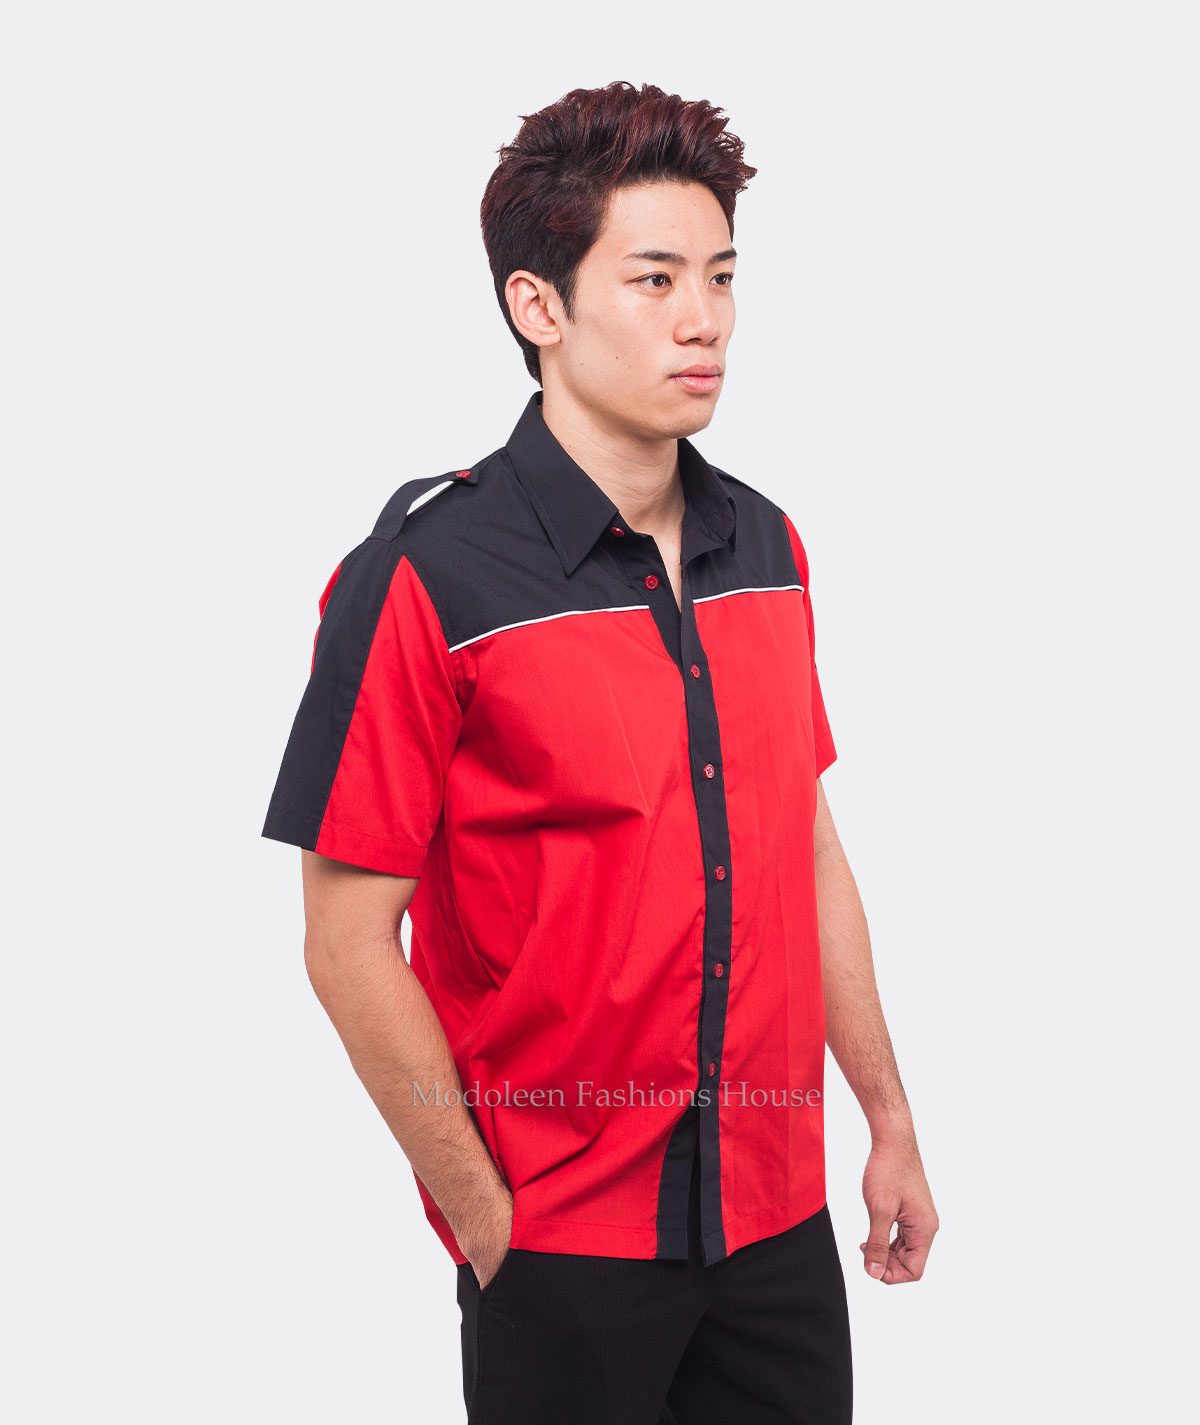 Automobile Sales Representative Customer Service Shirt uniform